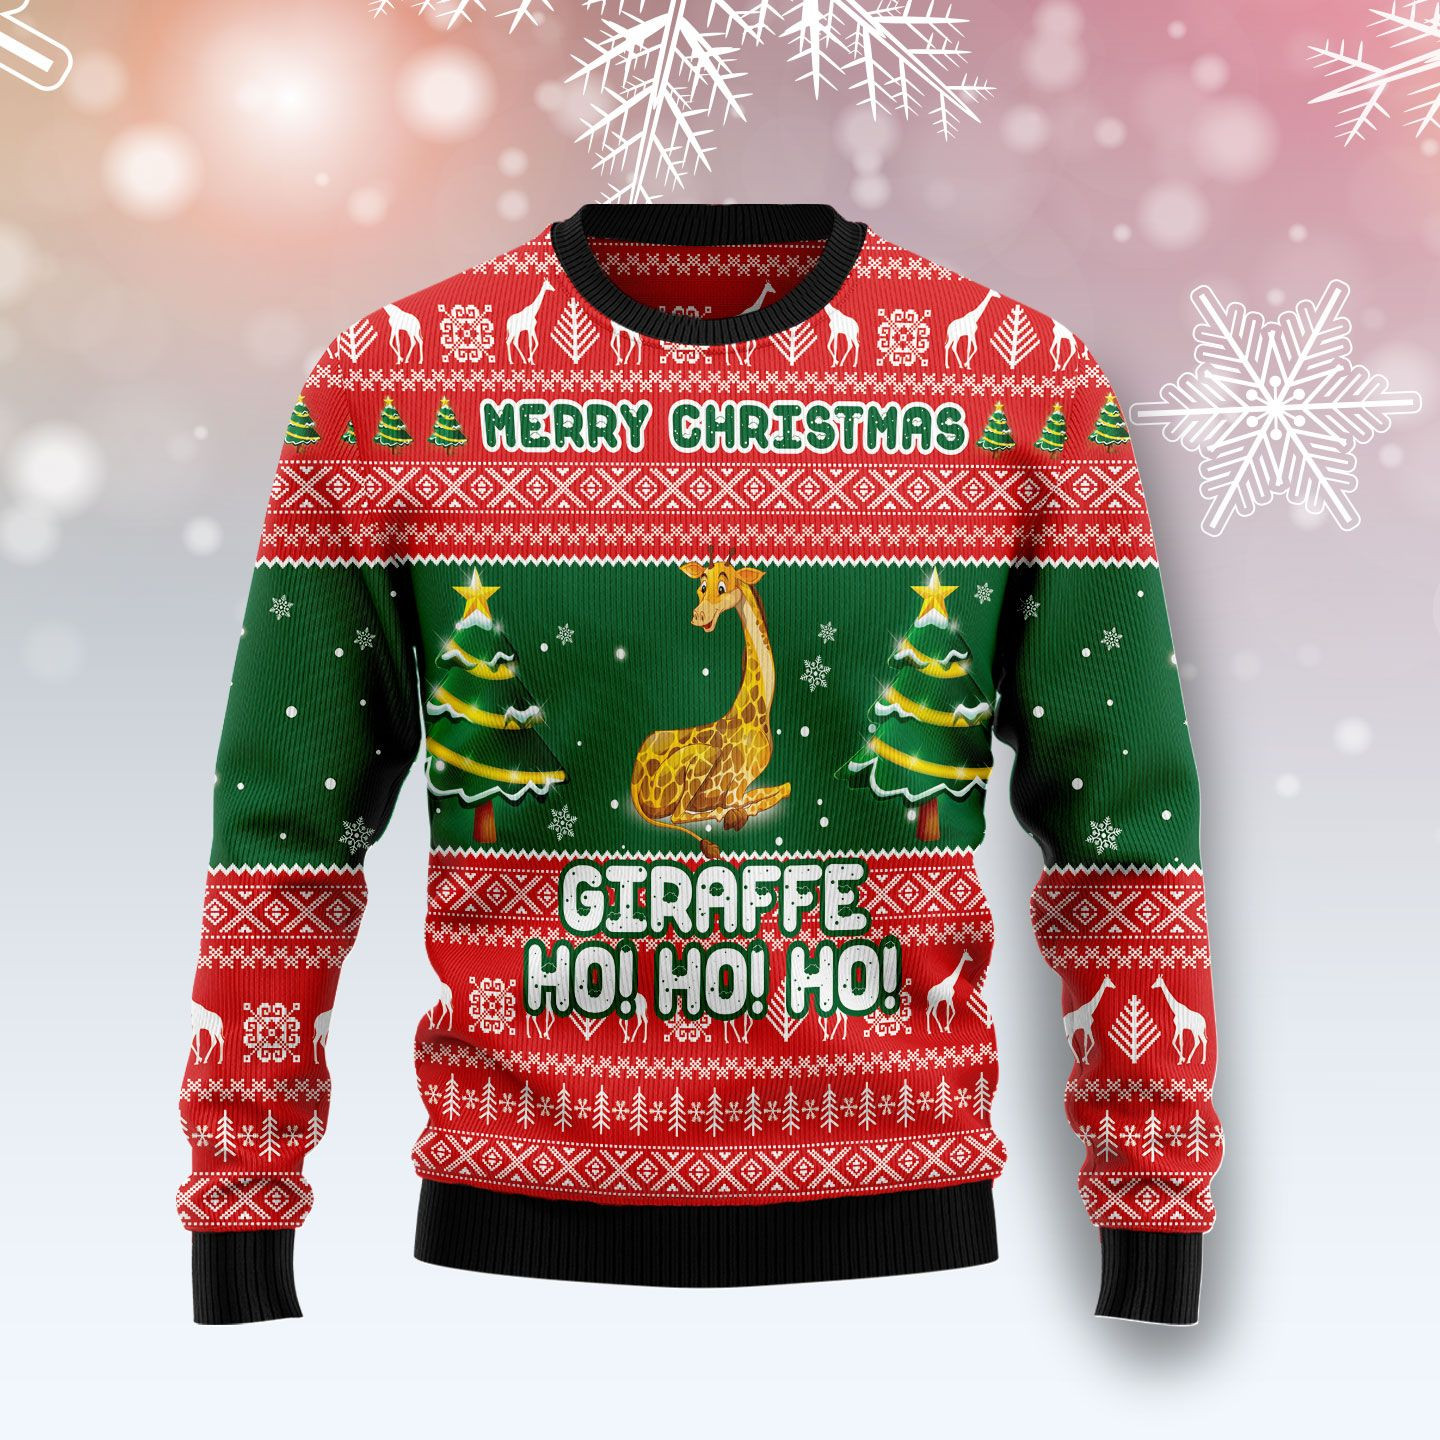 Giraffe Ho Ho Ho Ugly Christmas Sweater Ugly Sweater For Men Women